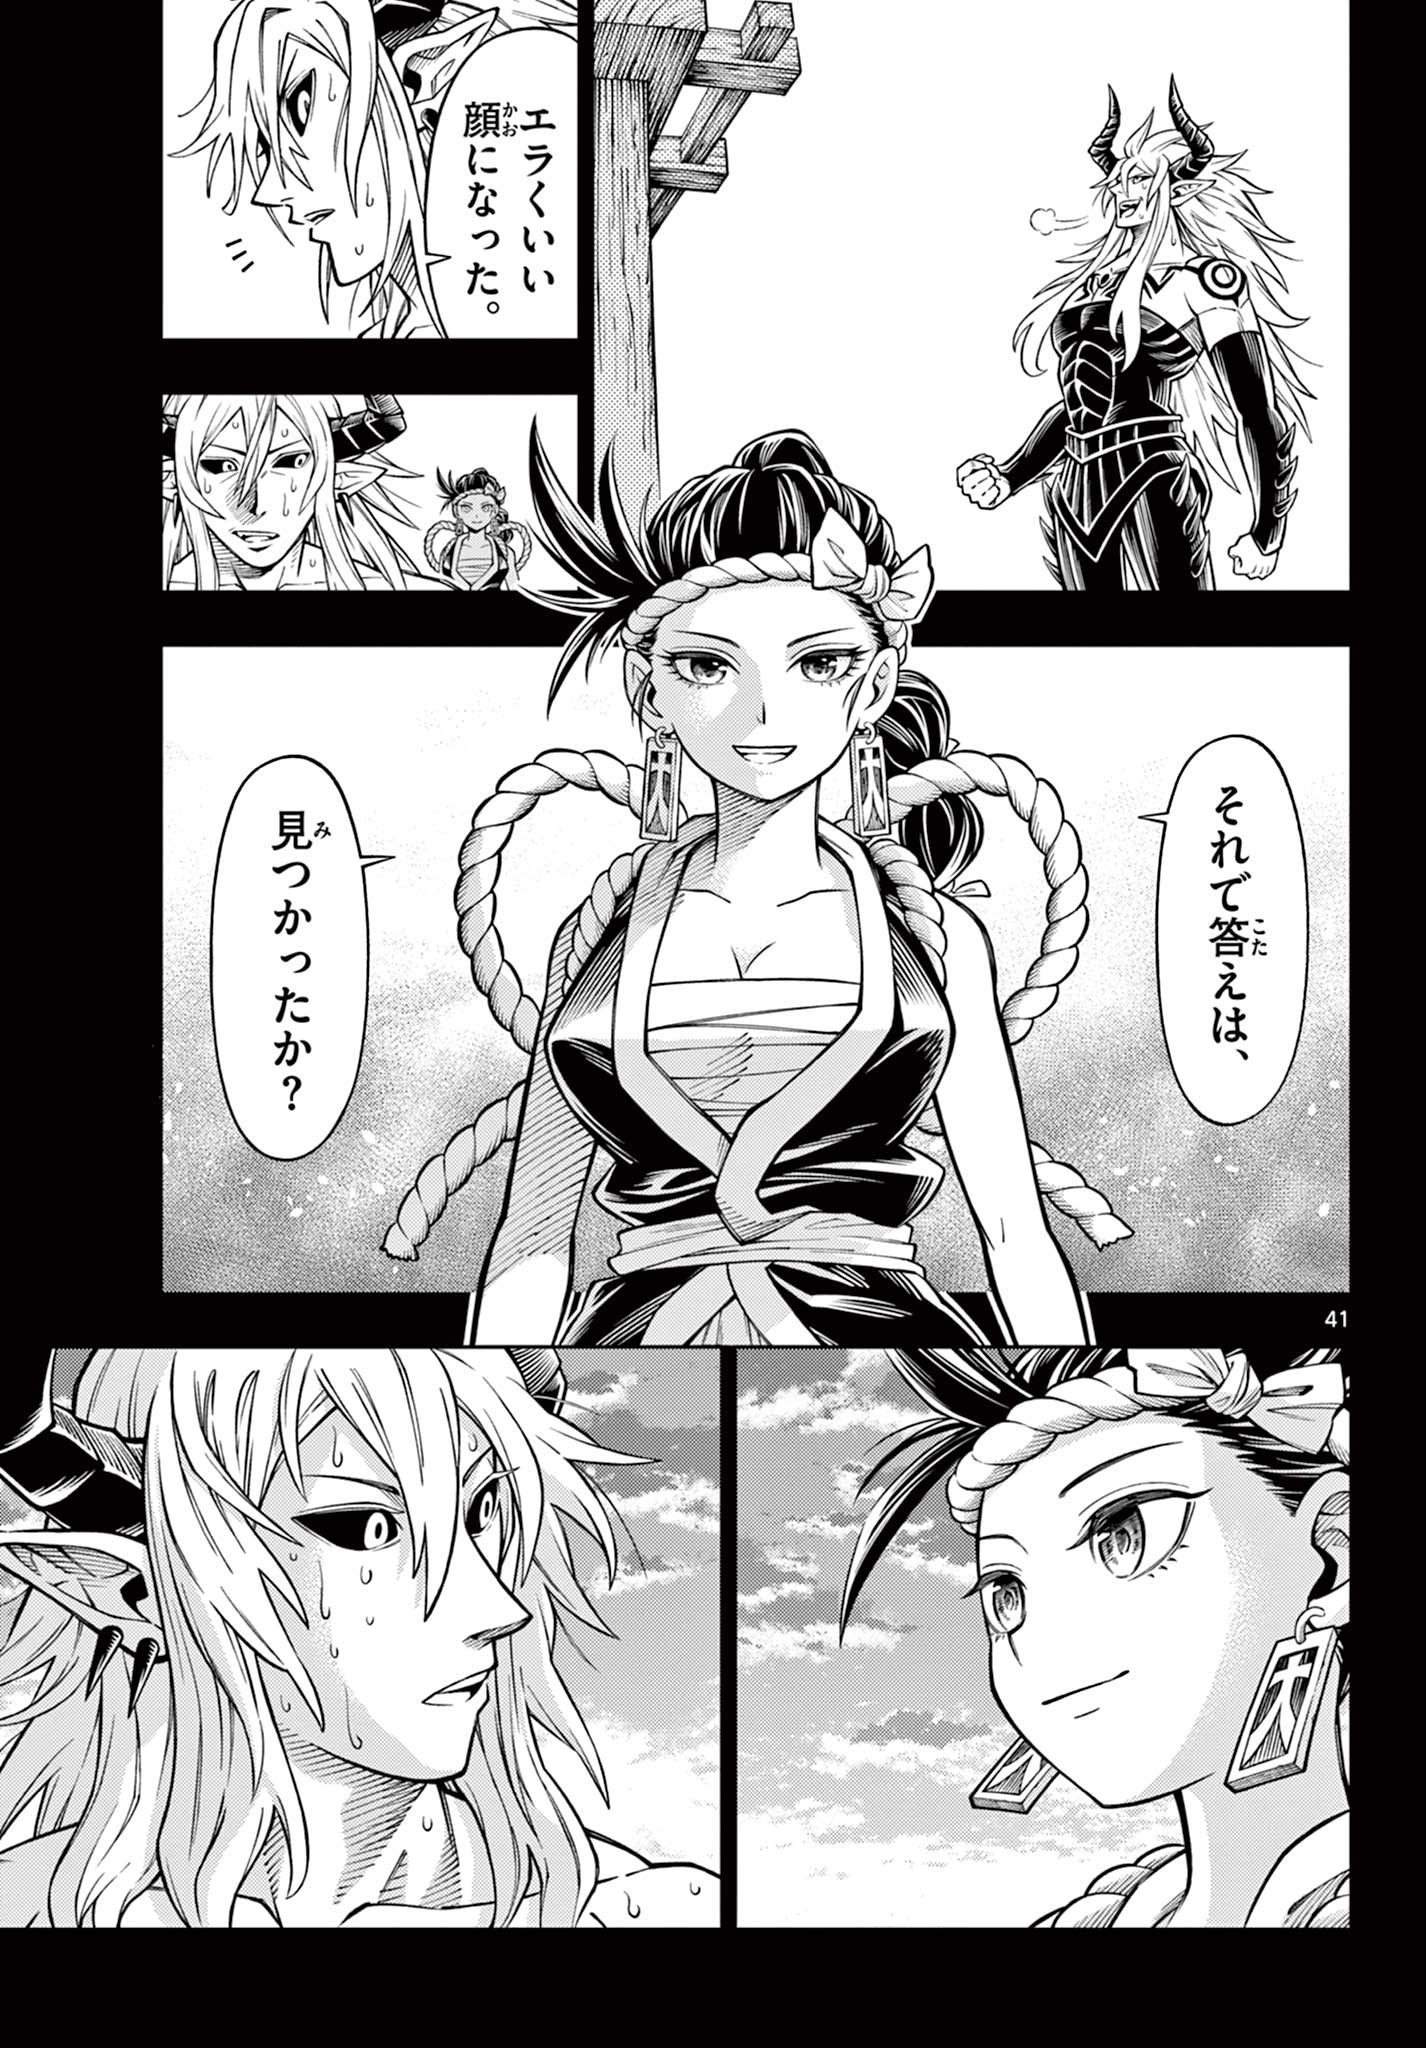 Soara to Mamono no ie - Chapter 10.2 - Page 20